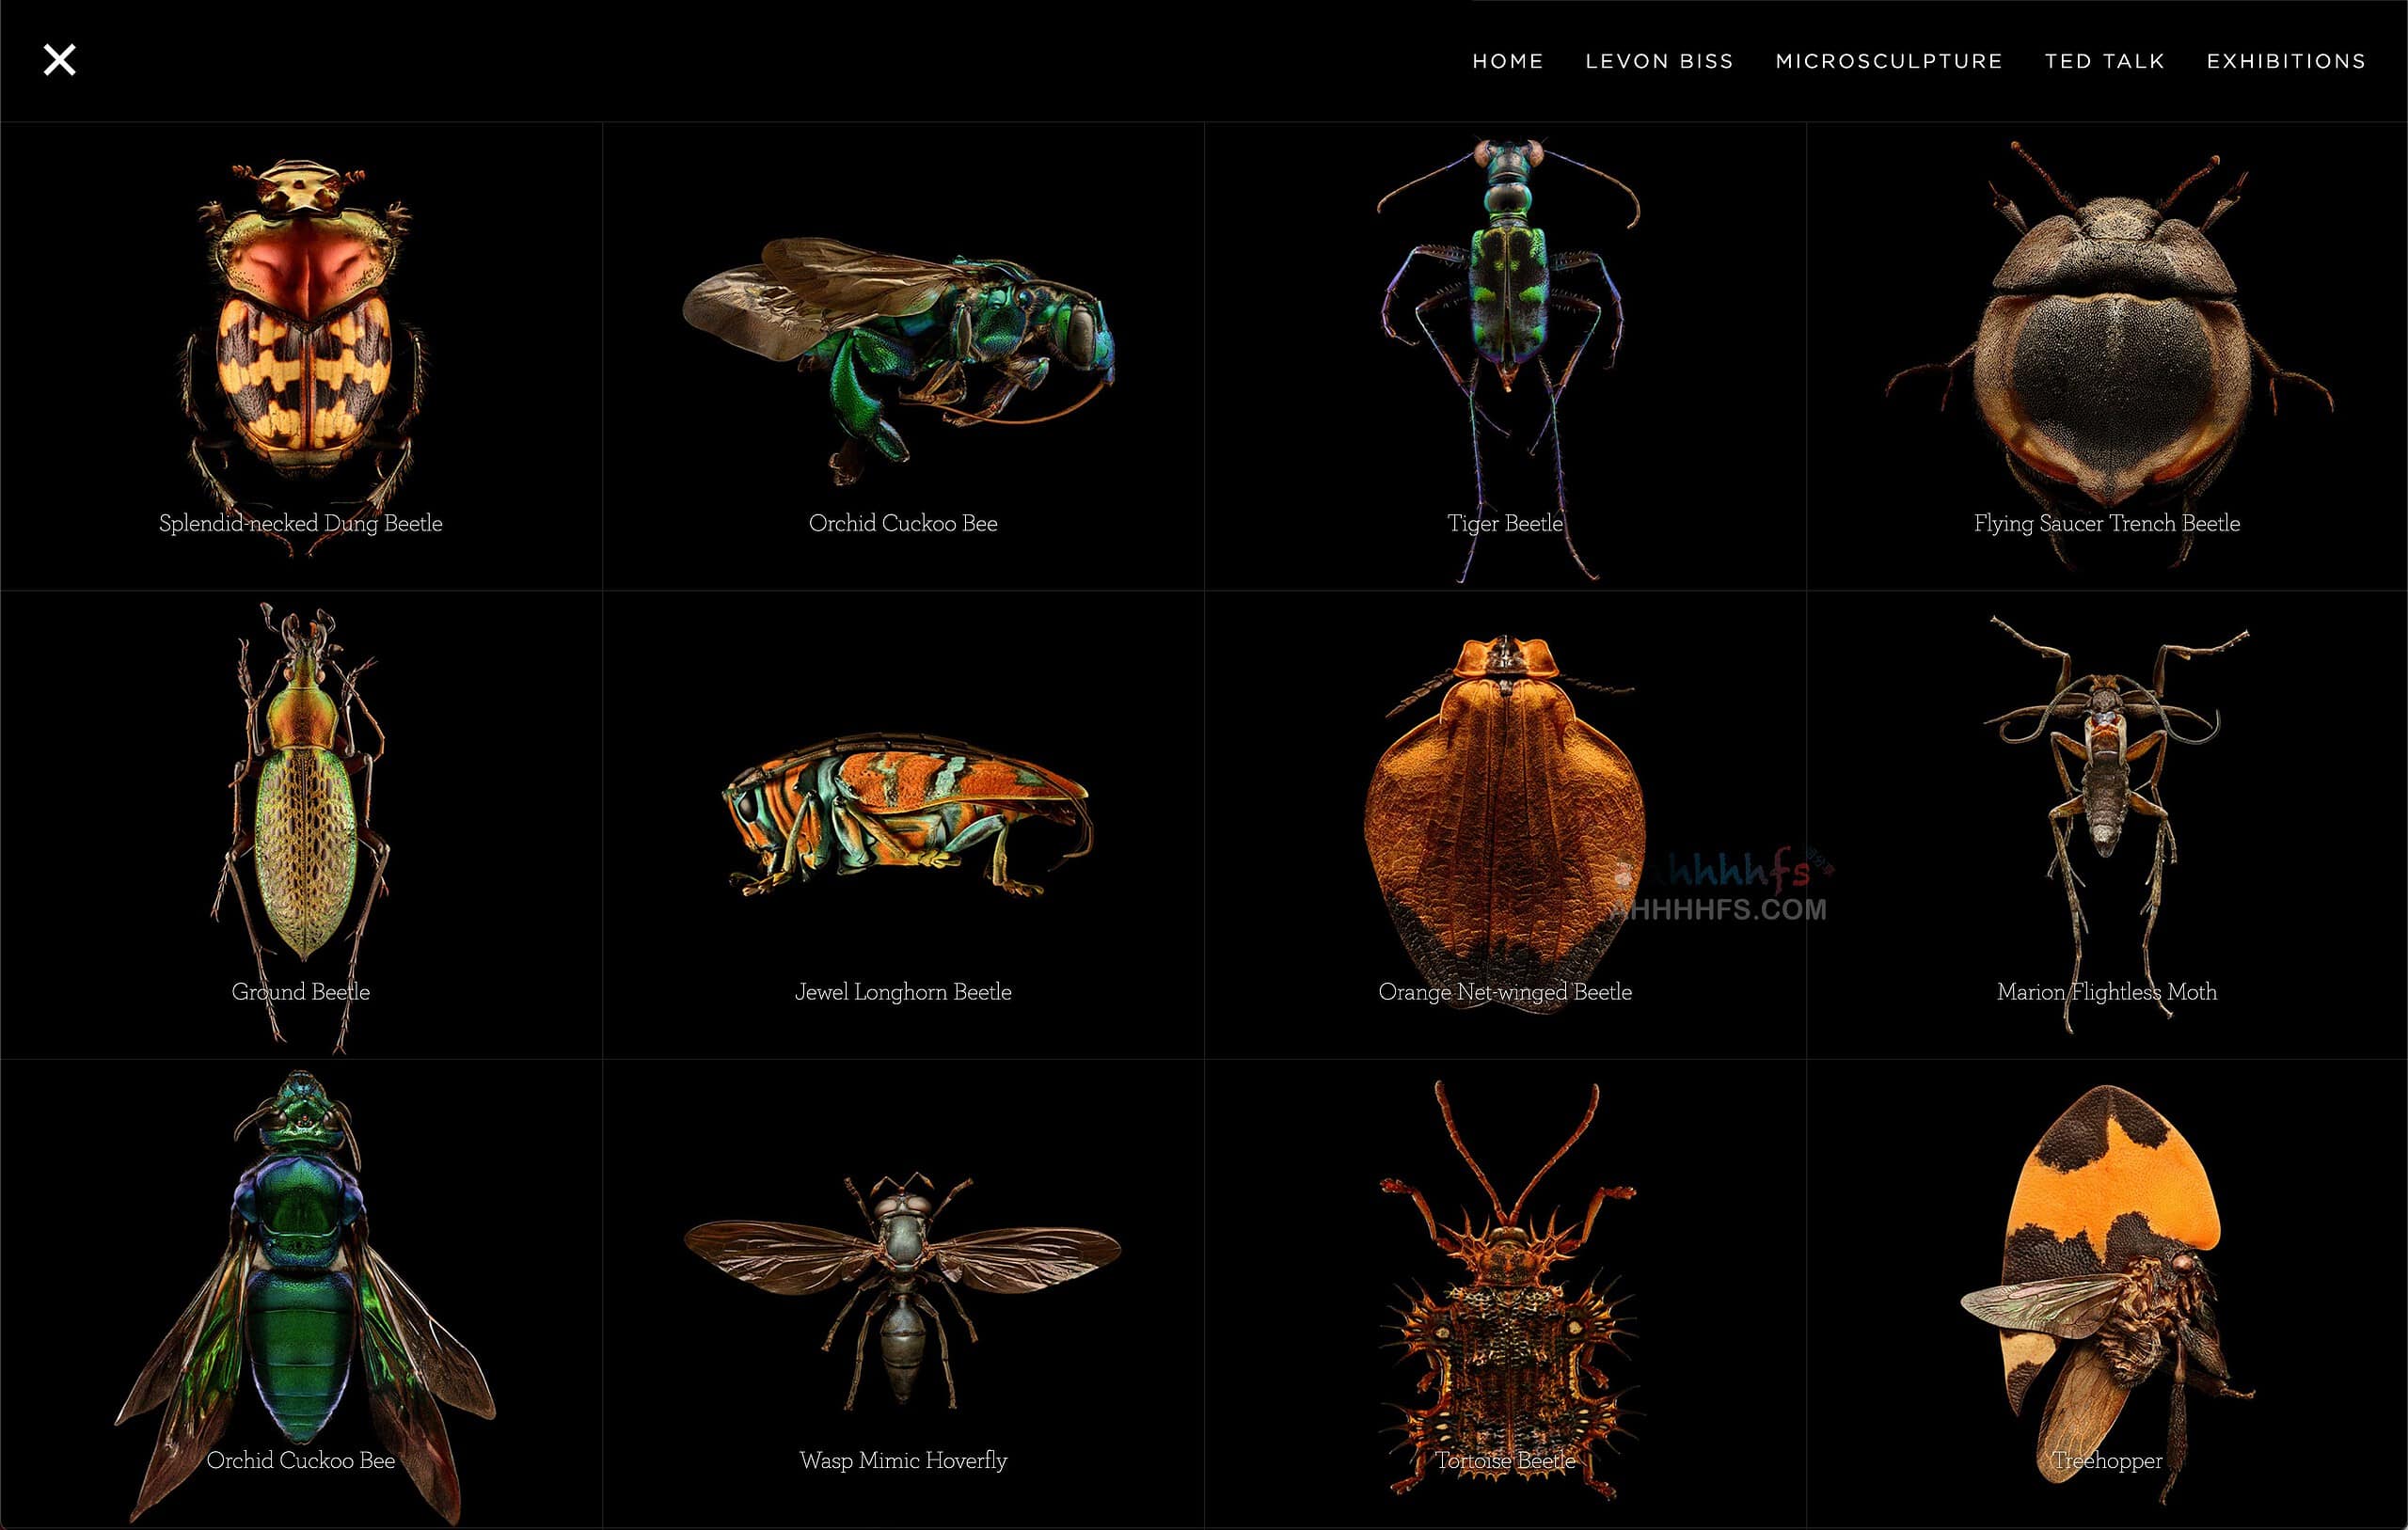 Microsculpture-昆虫肖像 超清昆虫微距摄影图片